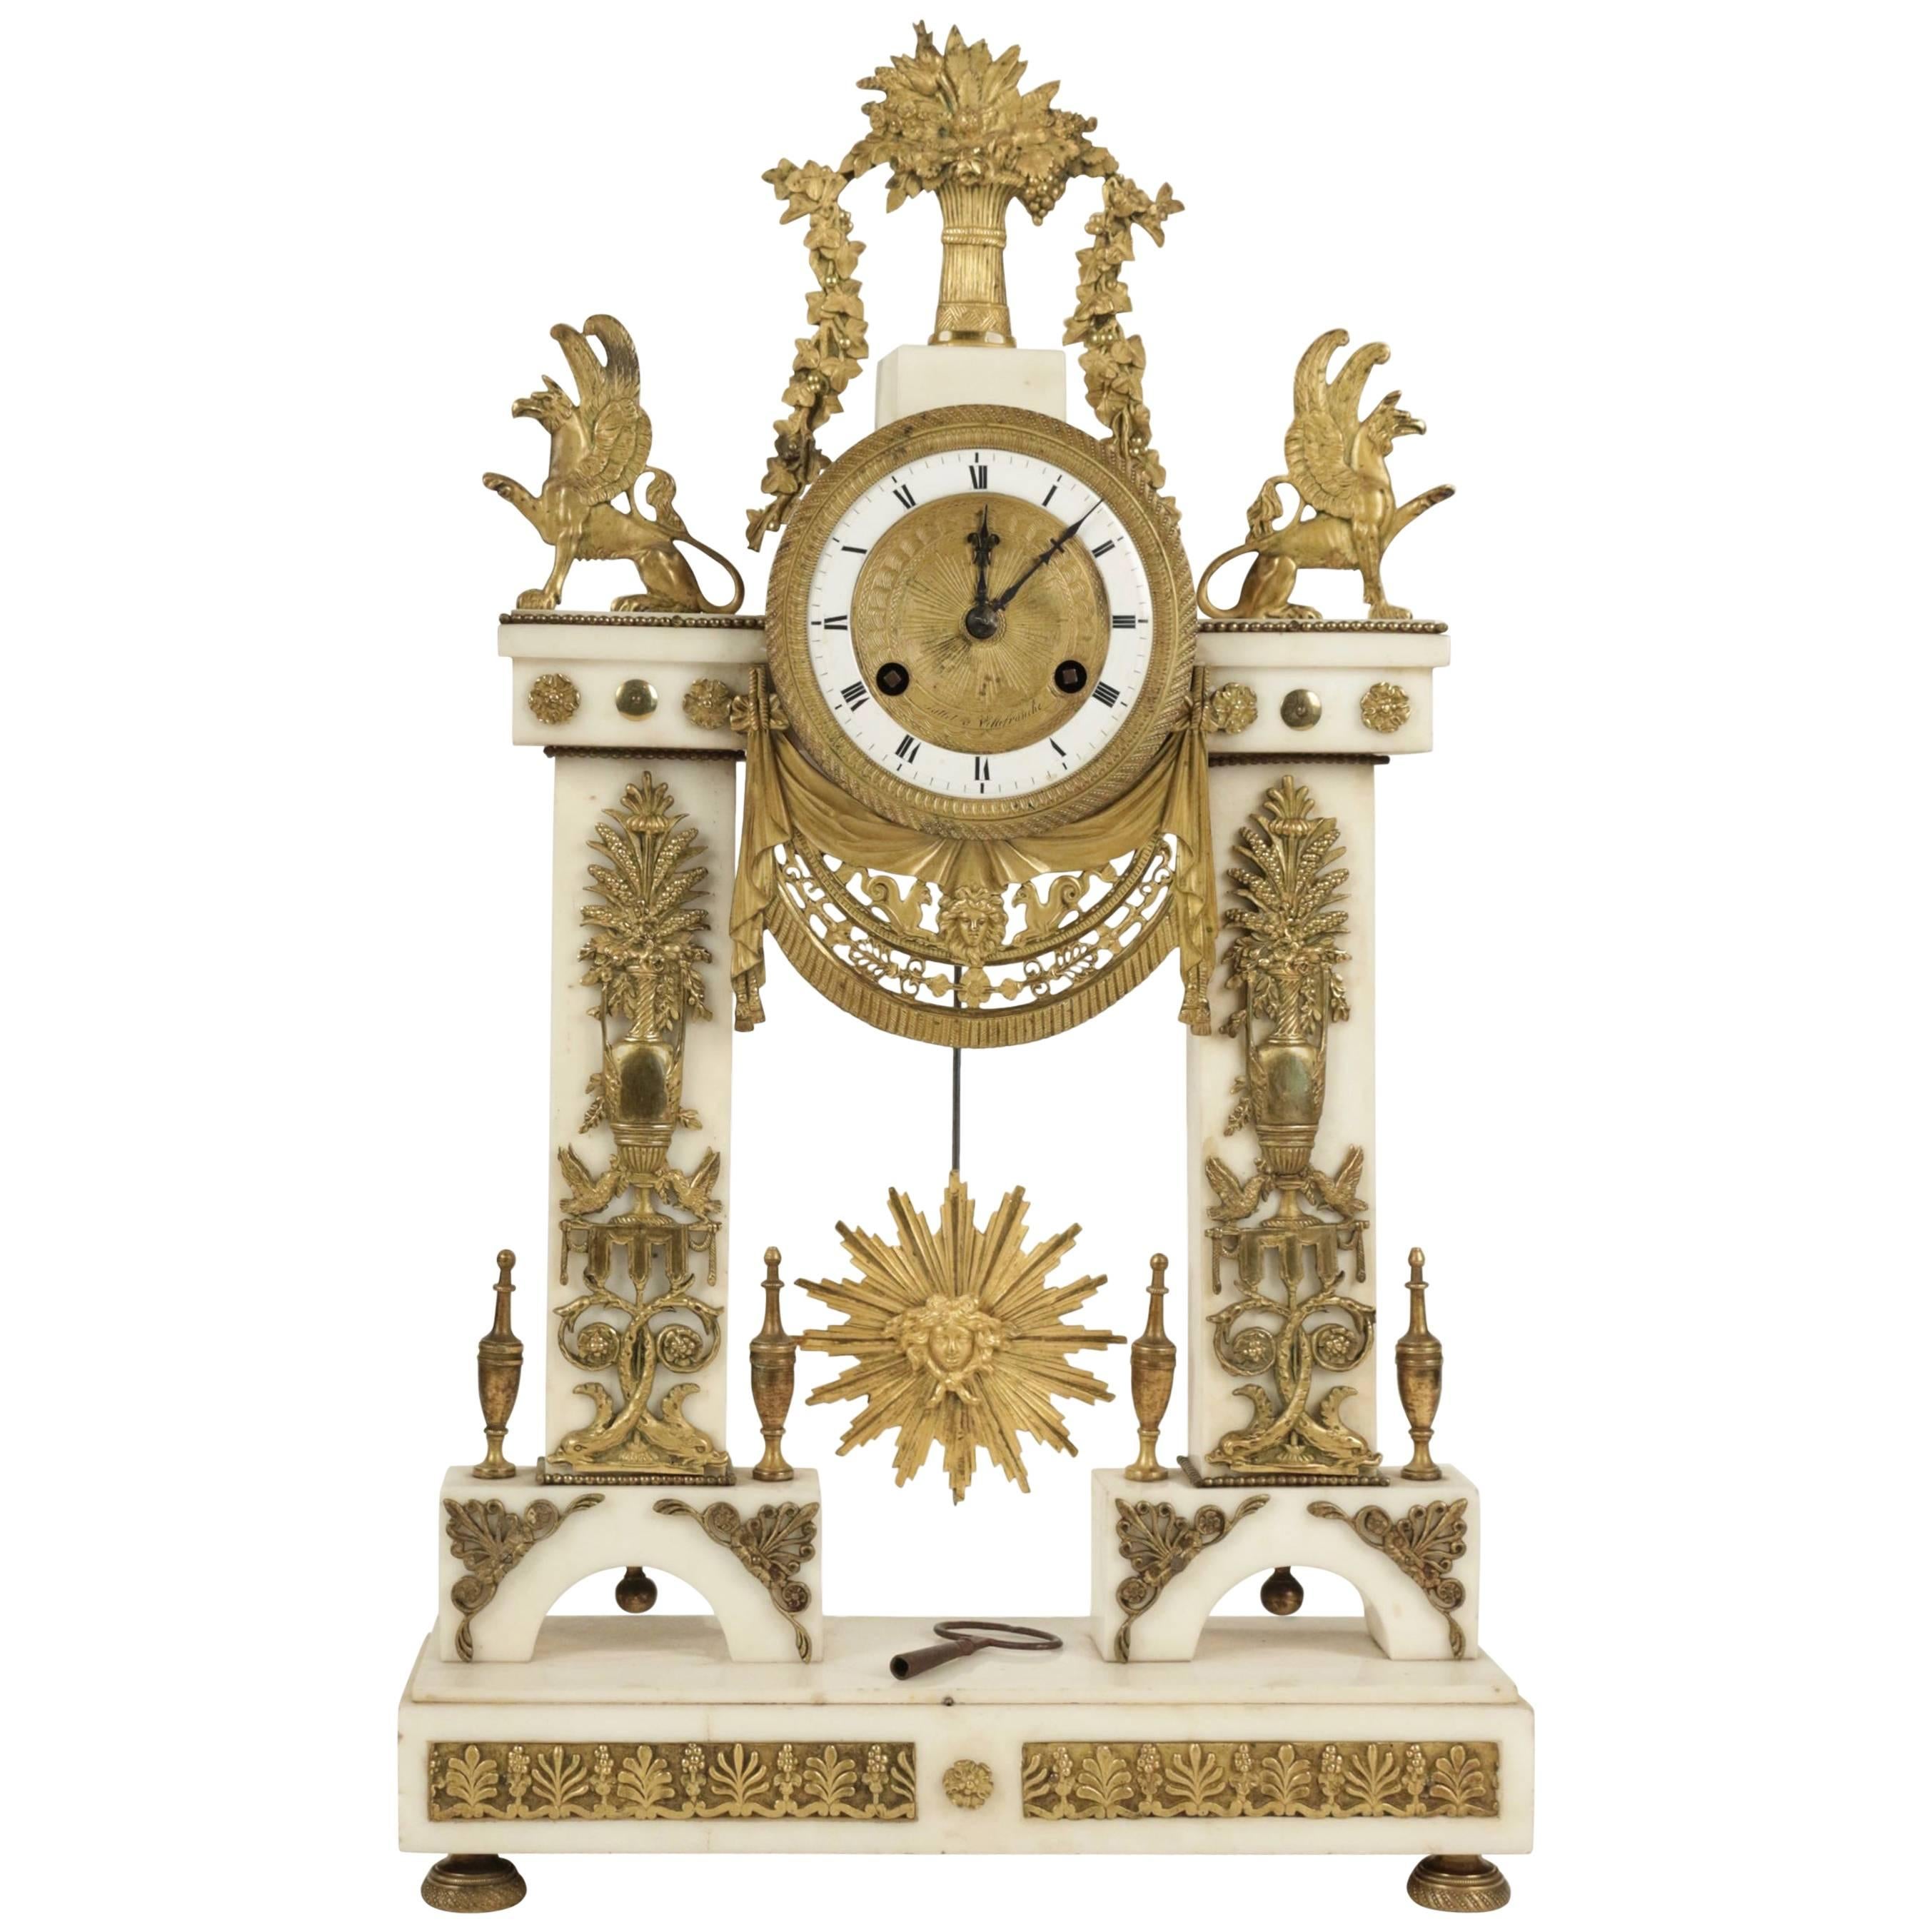 French Empire Period White Carrara Marble and Ormolu Clock, circa 1810